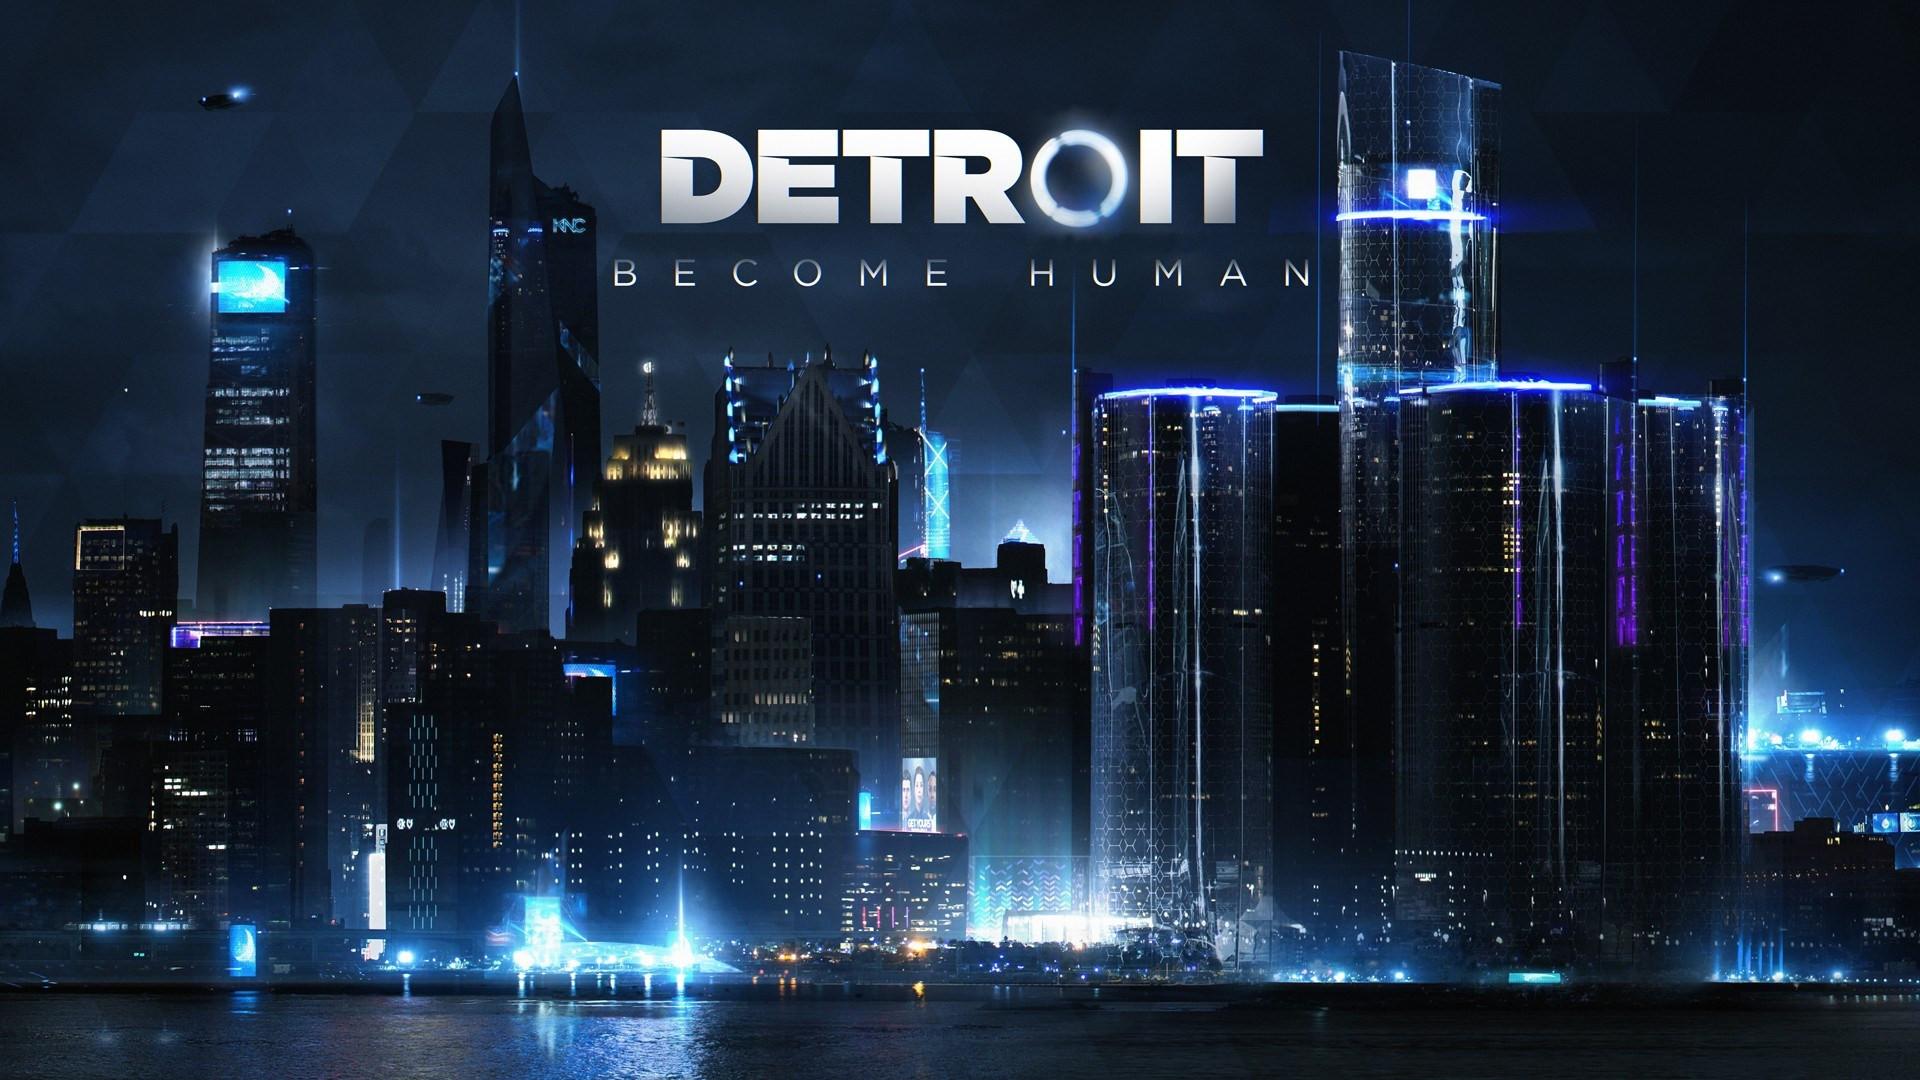 Download wallpaper: Detroit Become Human 1920x1080